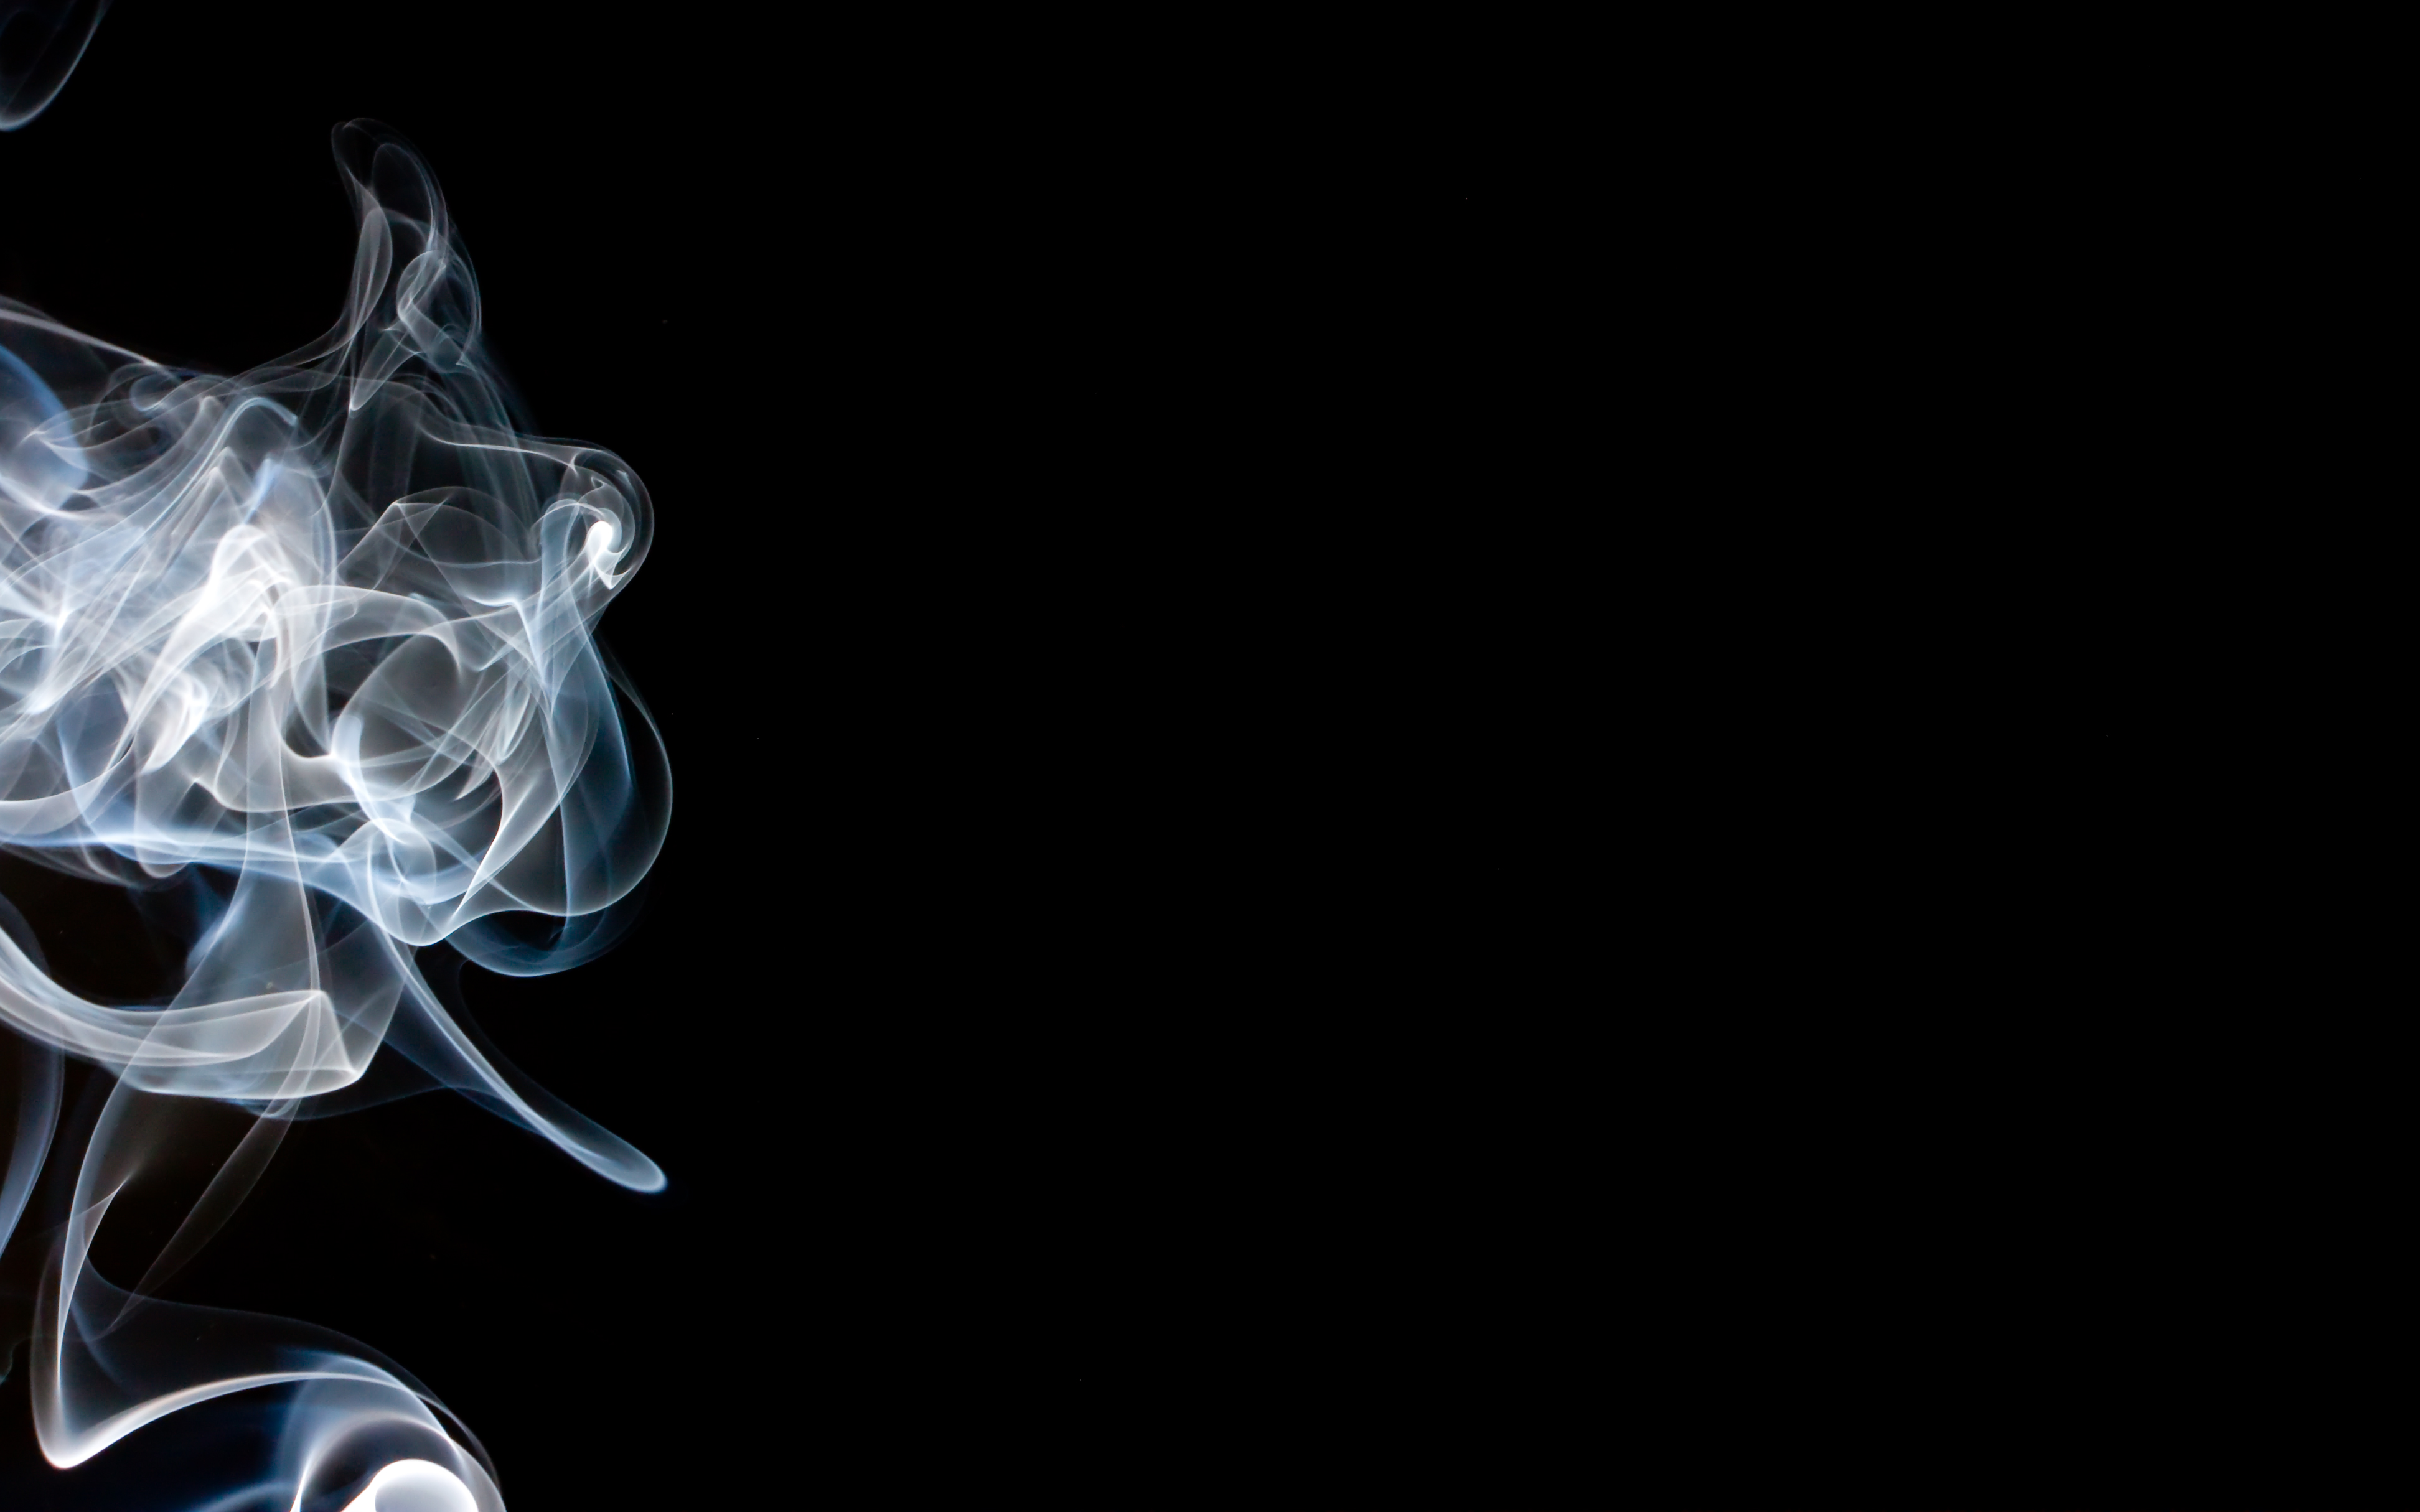 smoke wallpaper,smoke,smoking,black and white,darkness,graphic design